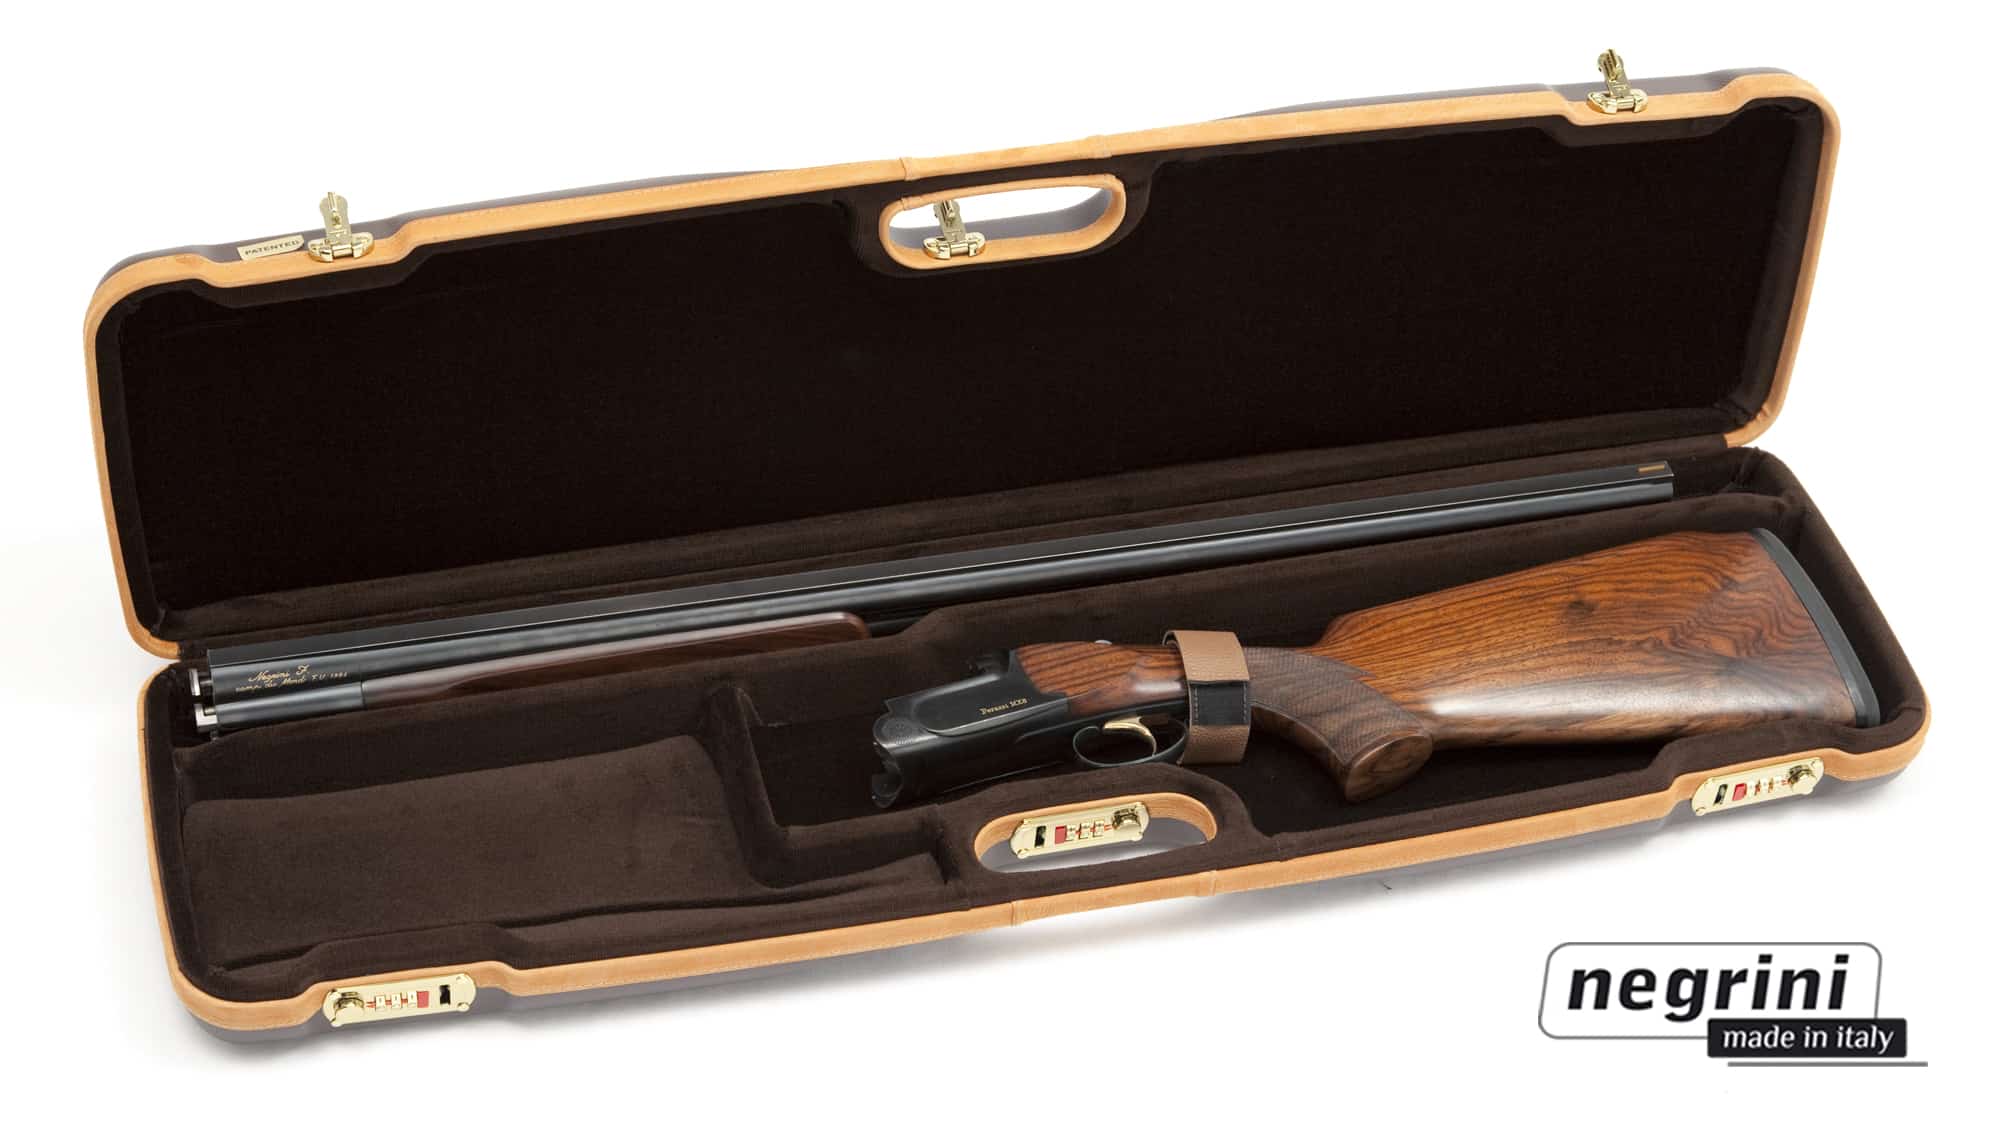 Plano single hard shotgun and rifle case 1501-94